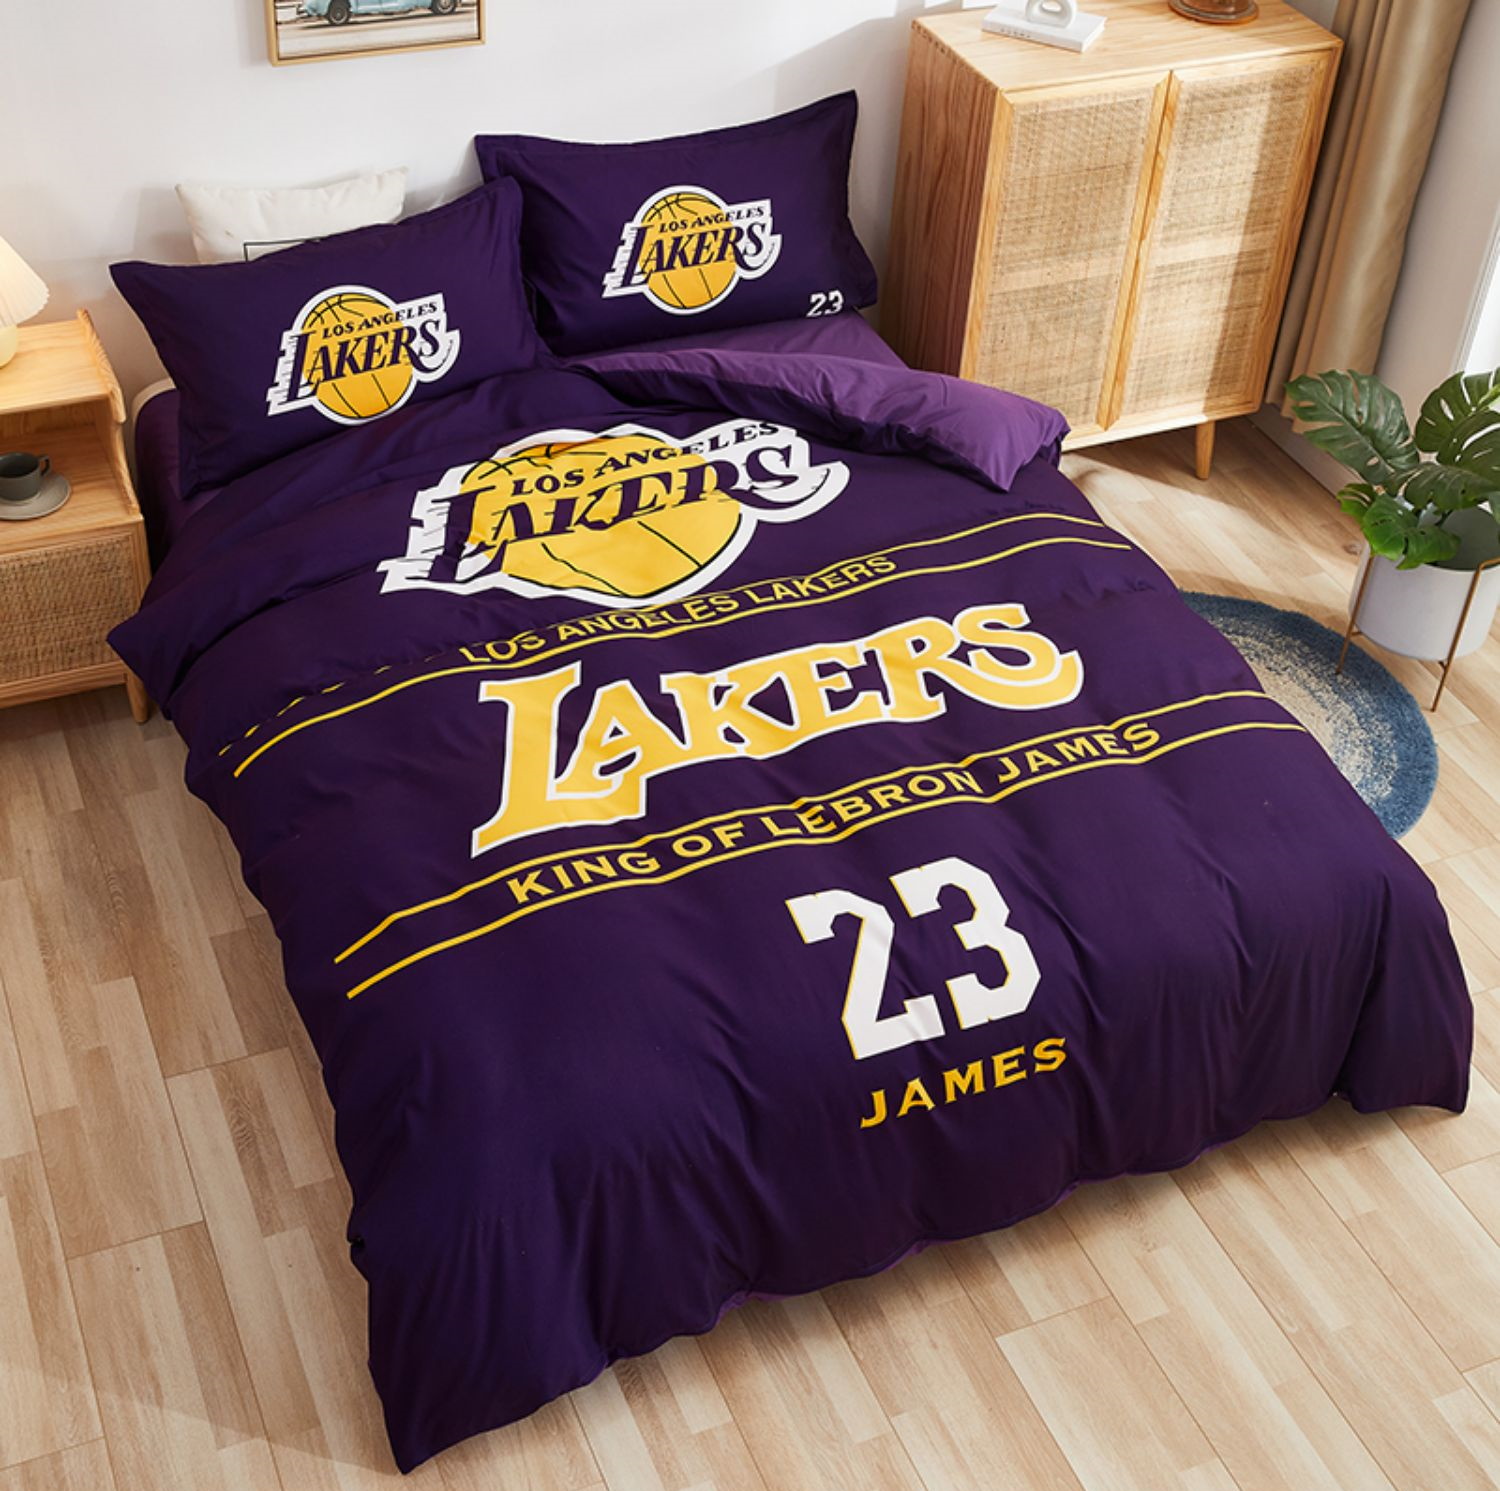 Postelnoe belyo Los Angeles Lakers James Lebron 23 Purple